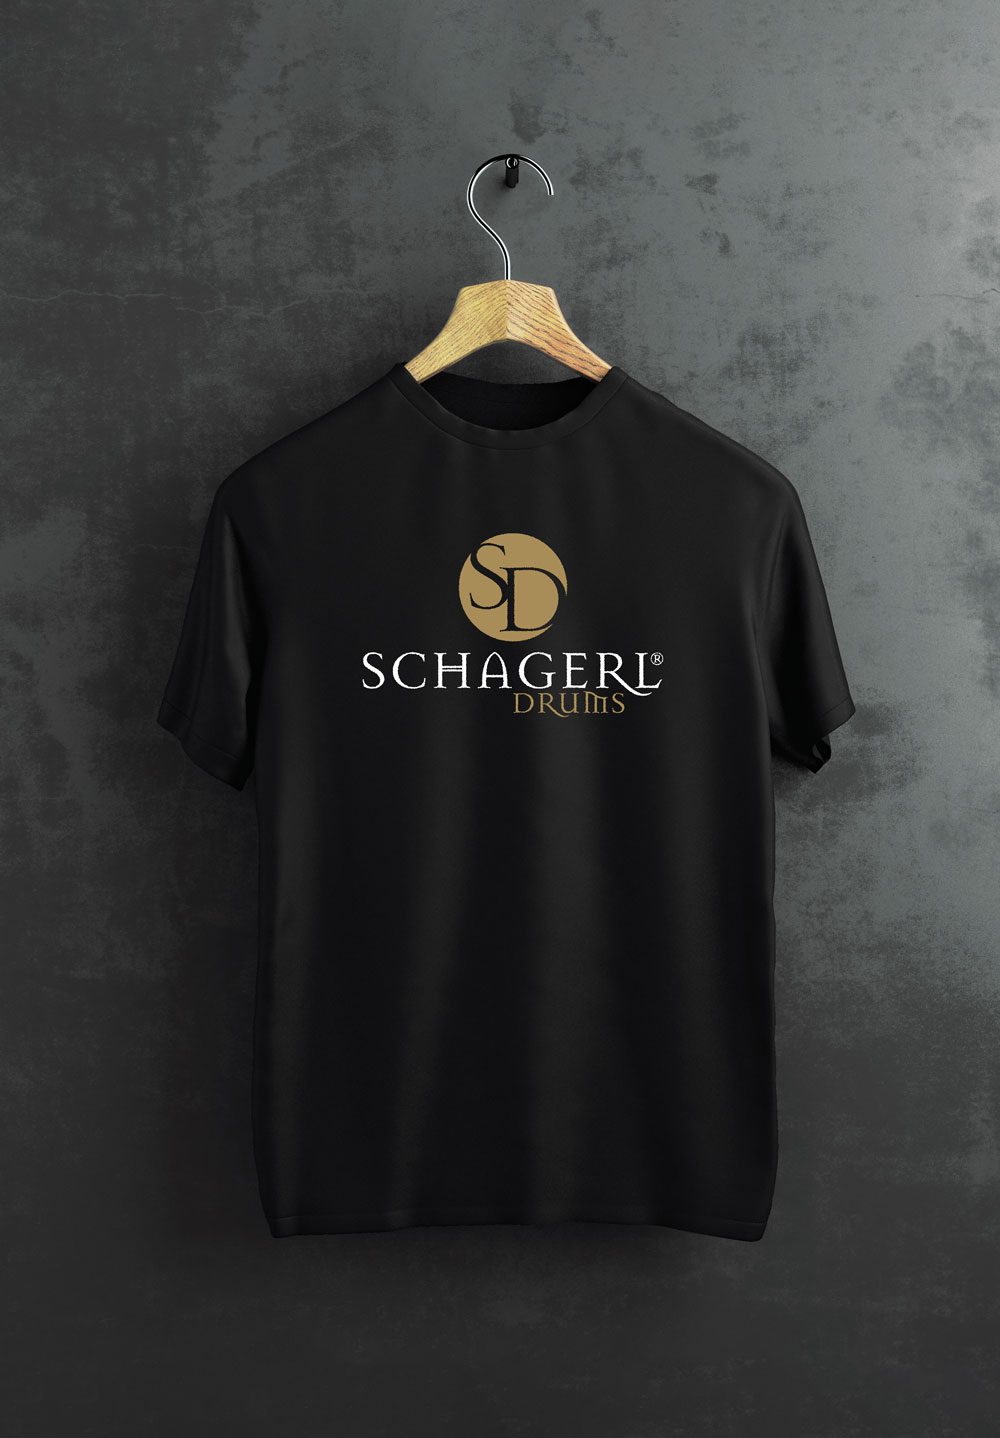 Schagerl Drums T-Shirt black 2019 SD - XLARGE